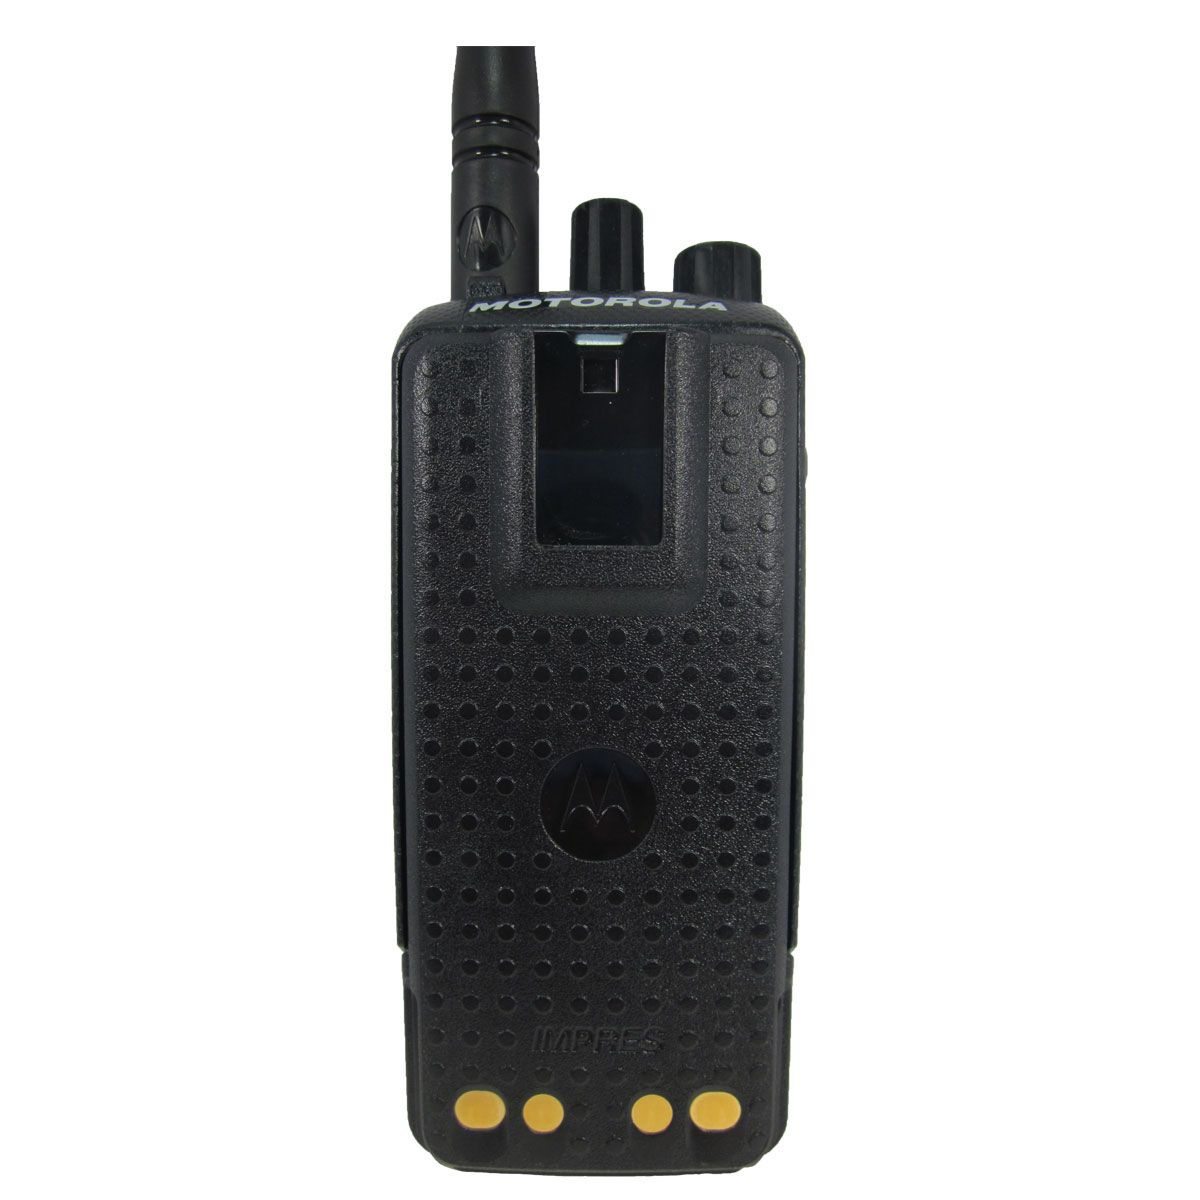 Radio Motorola DEP550 Digital LAH02RDC8JA2AN UHF 403-527 MHz